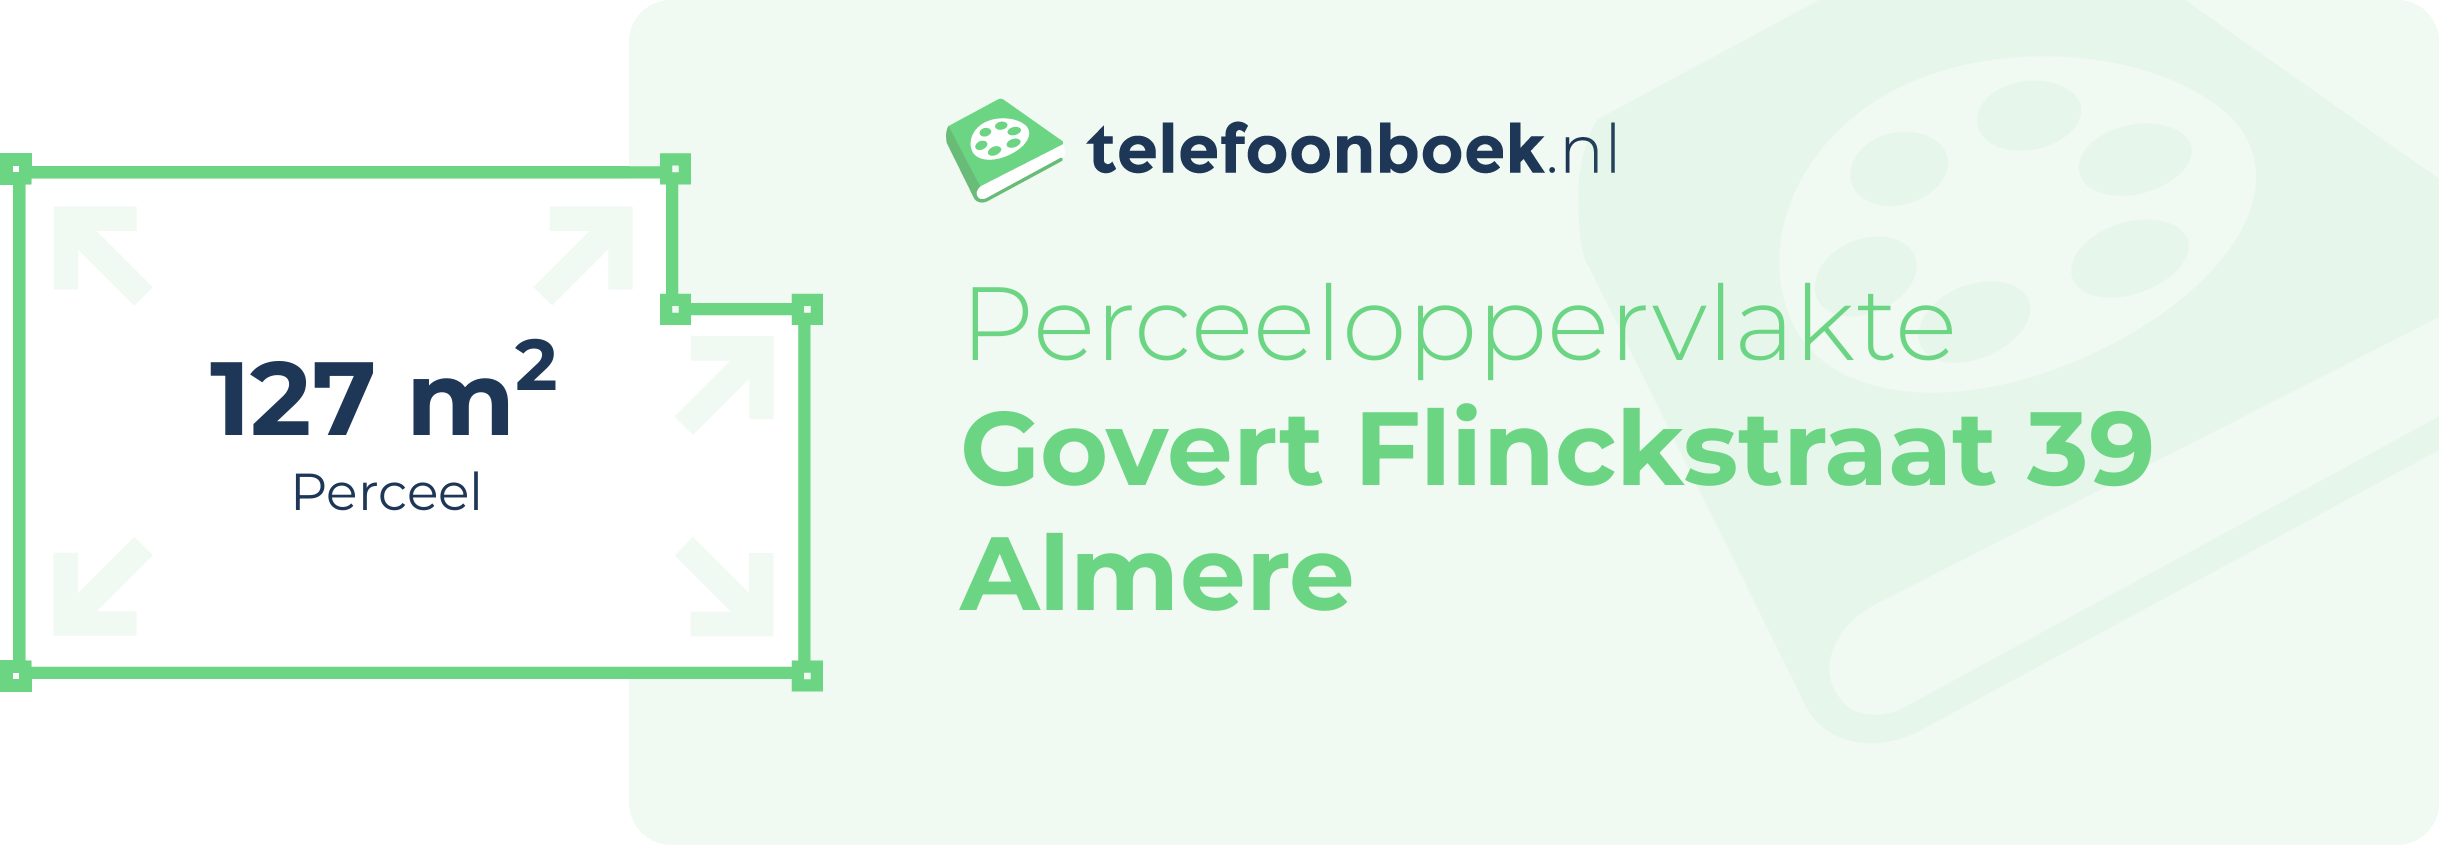 Perceeloppervlakte Govert Flinckstraat 39 Almere